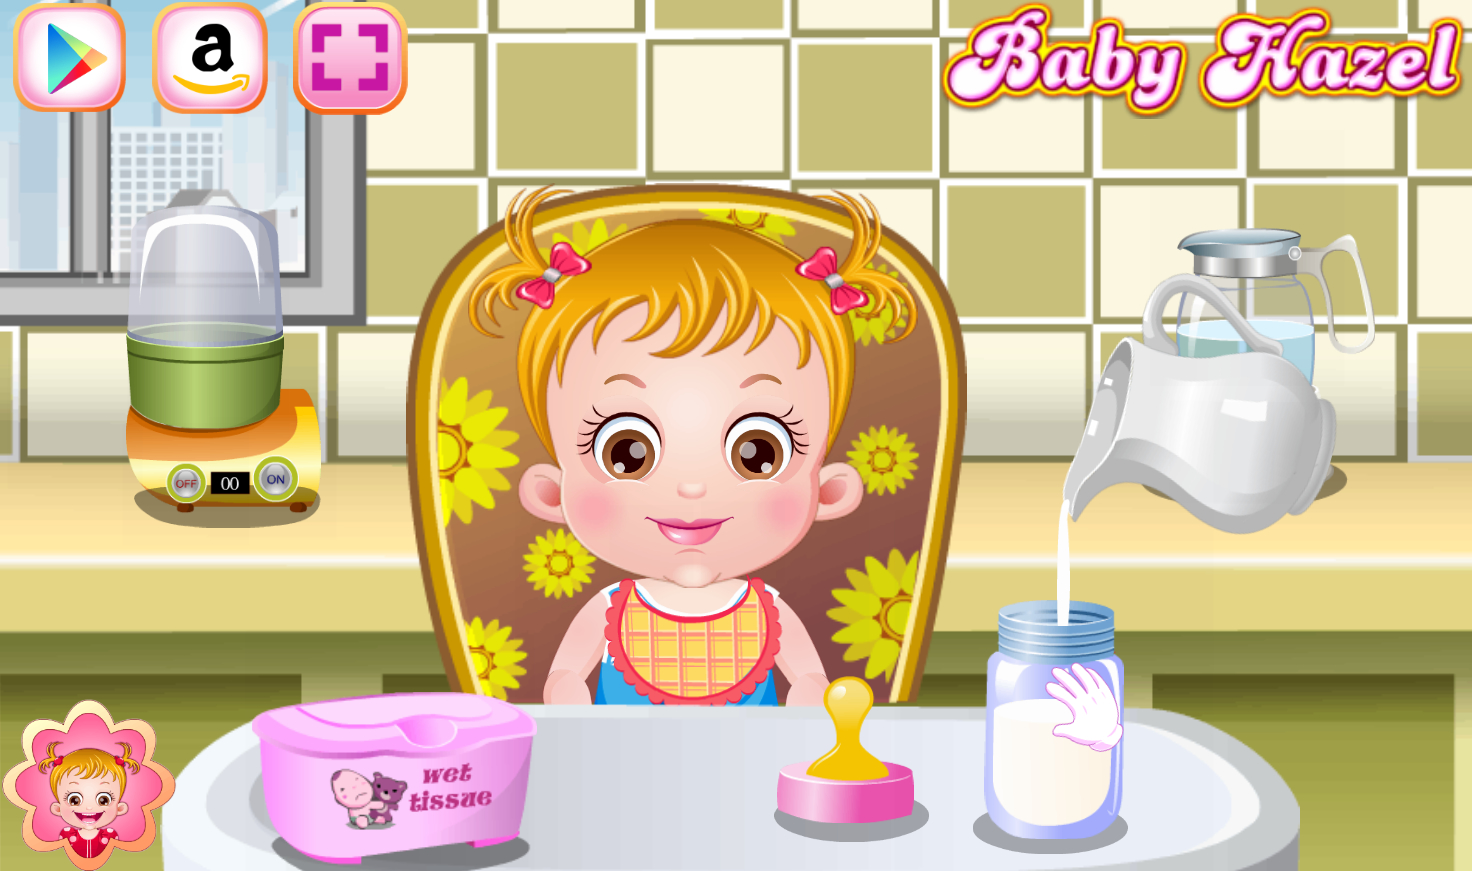 Jogo Baby Hazel Funtime no Jogos 360